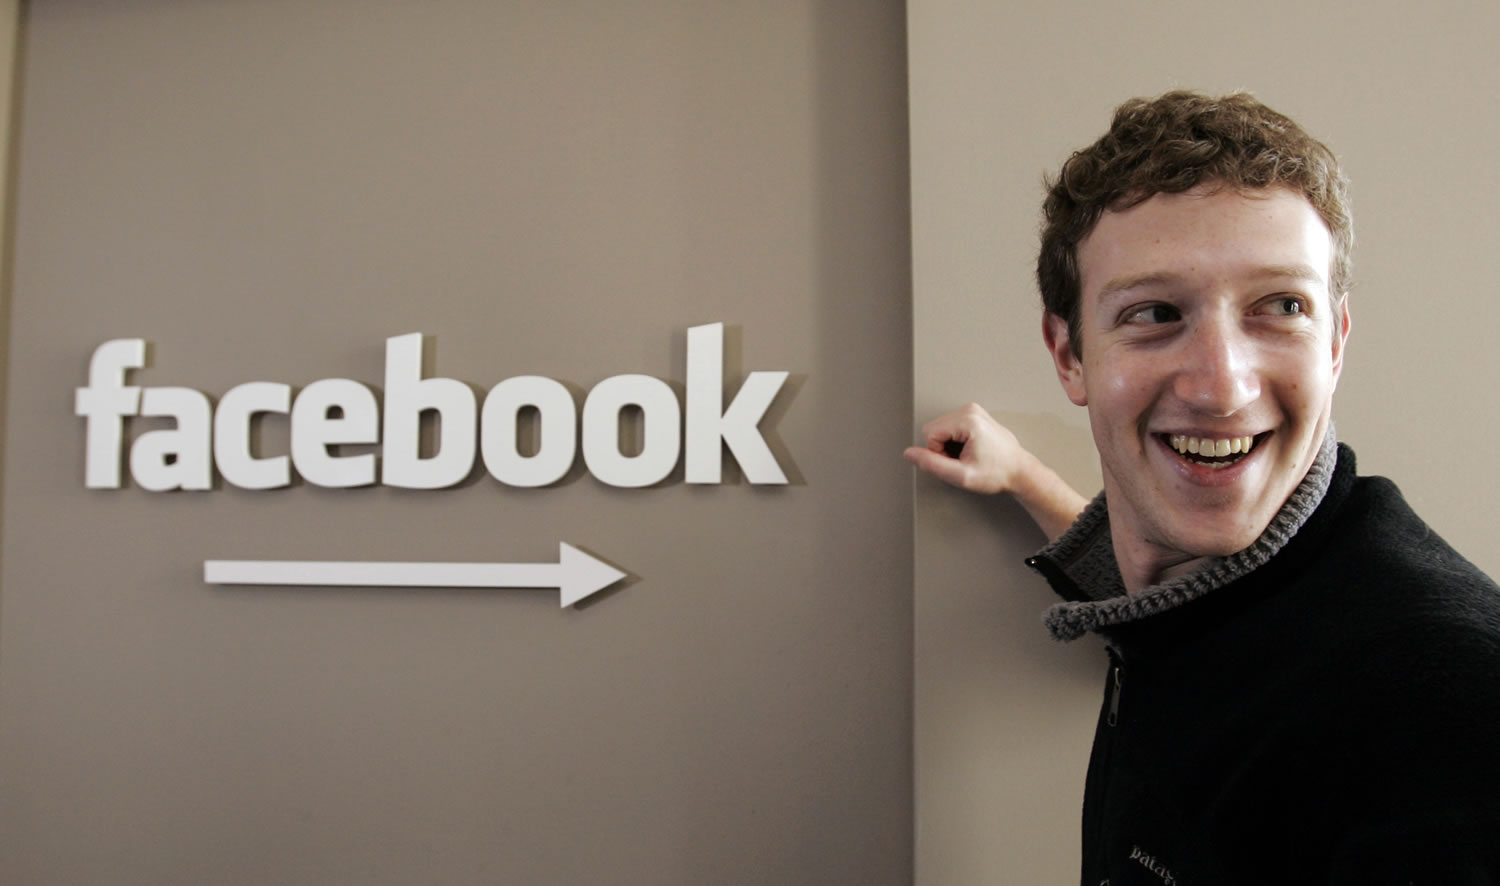 Facebook.com founder Mark Zuckerberg smiling at Facebook headquarters in Palo Alto, Calif.